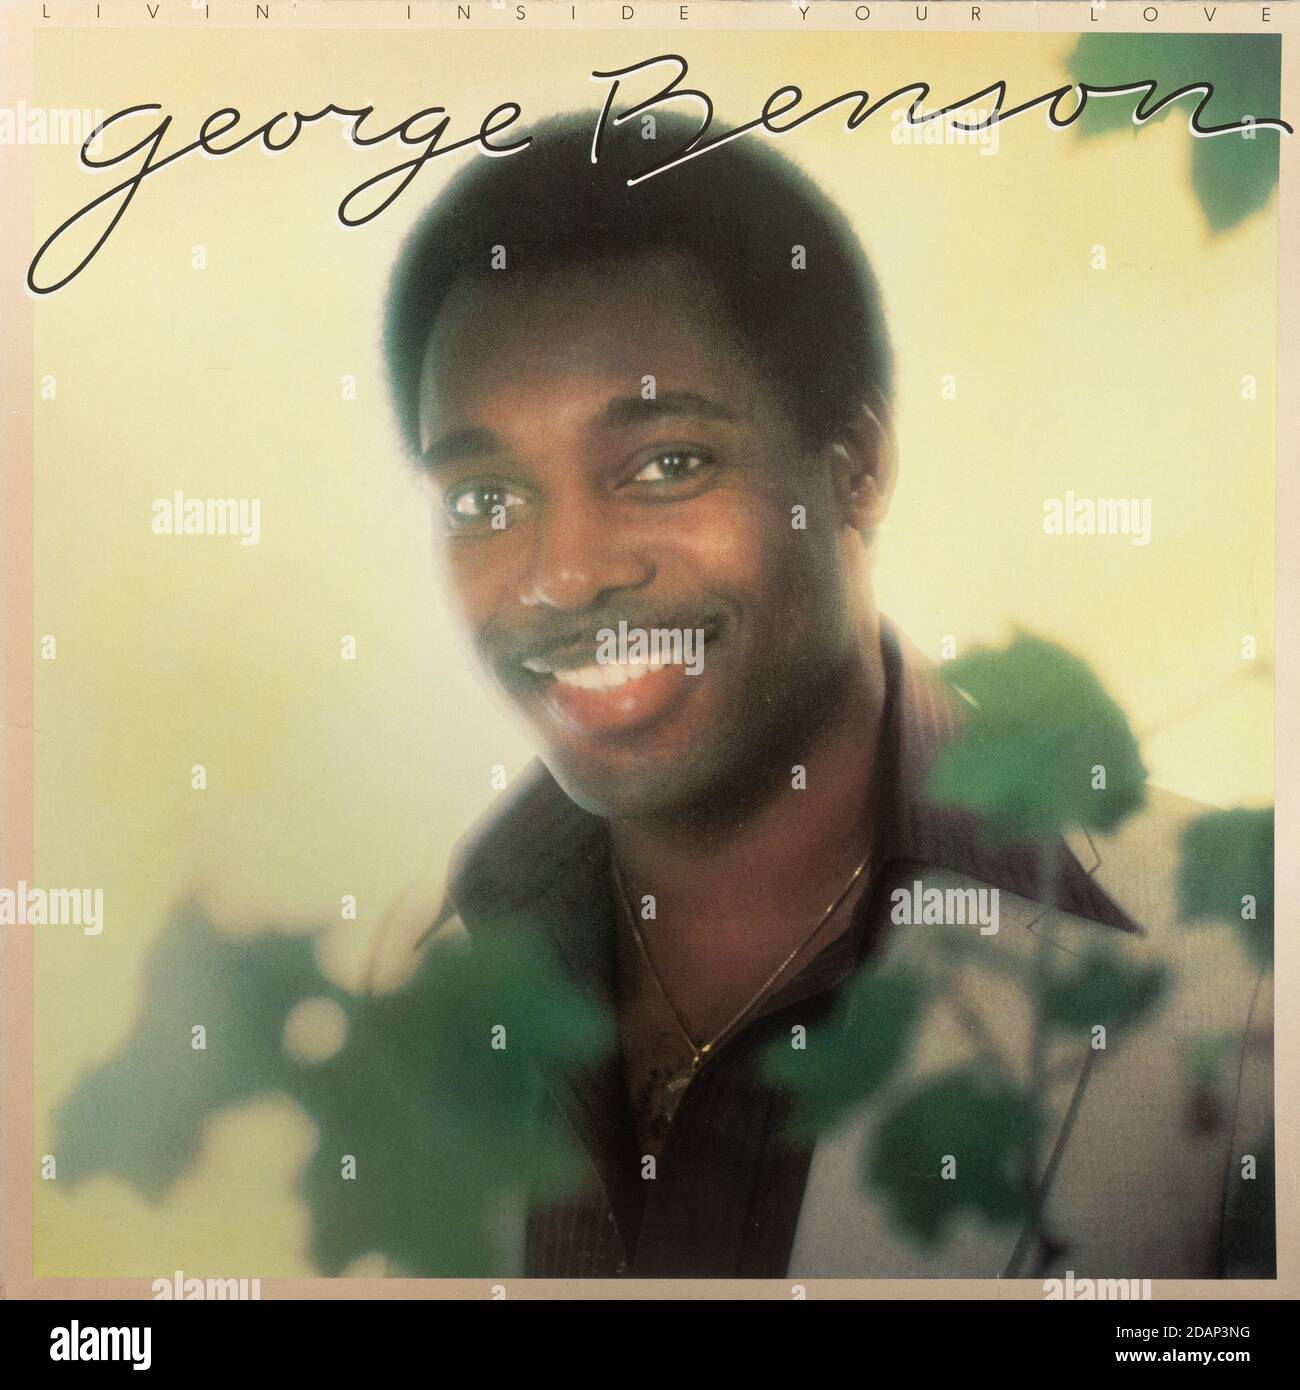 George Benson Livin' Inside Your Love, vinyl LP record album cover Stock Photo